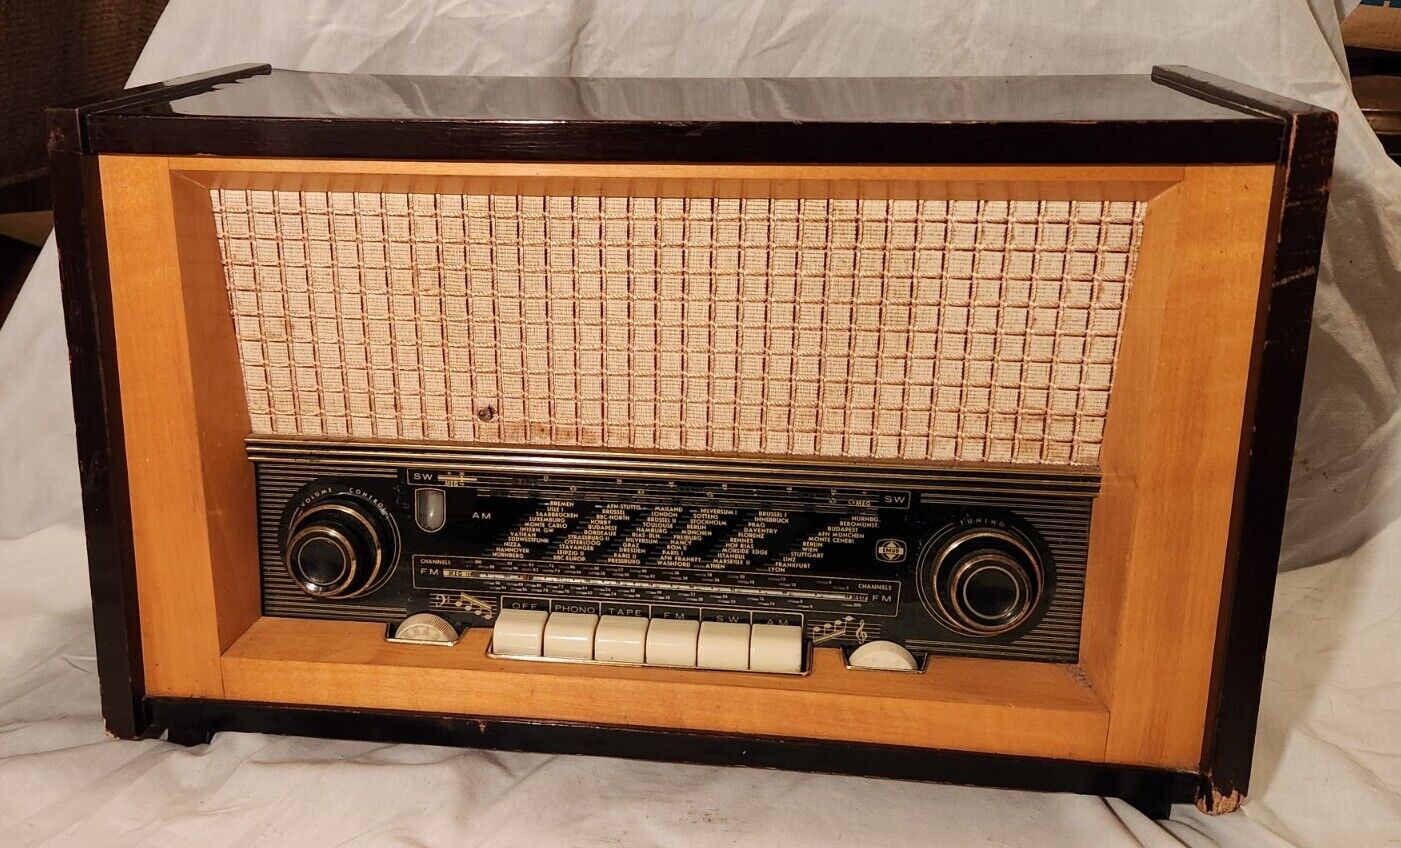 Rare Vintage German EMUD T7 Tube Radio AM FM Tested For Parts Or Repair TLC